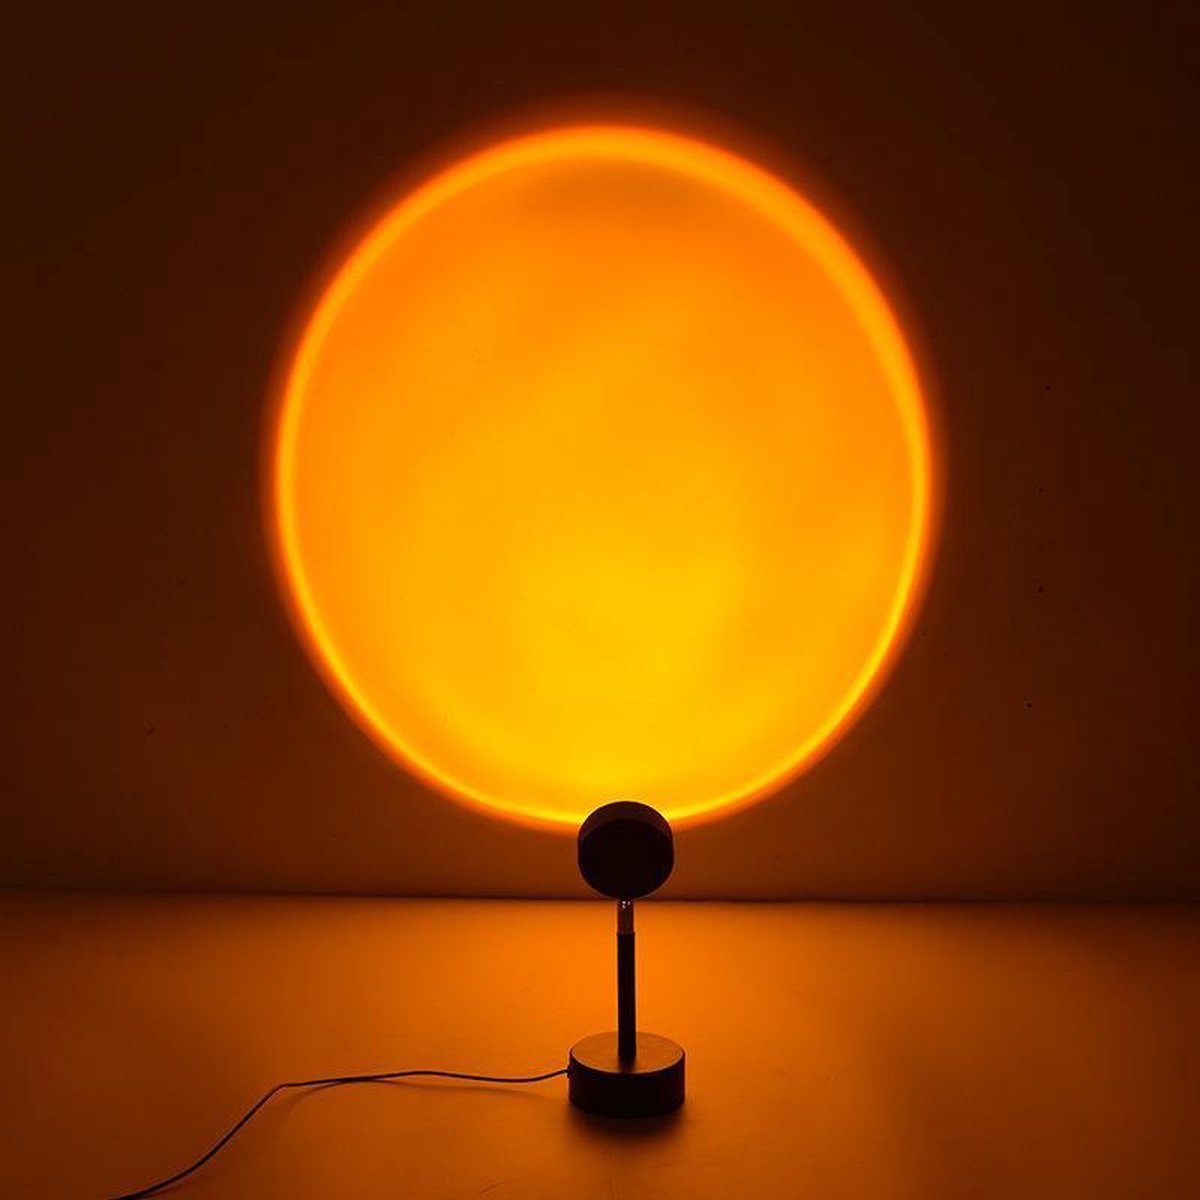 bol.com | Sunset lamp - Golden hour - Zonsondergang lamp - Projector